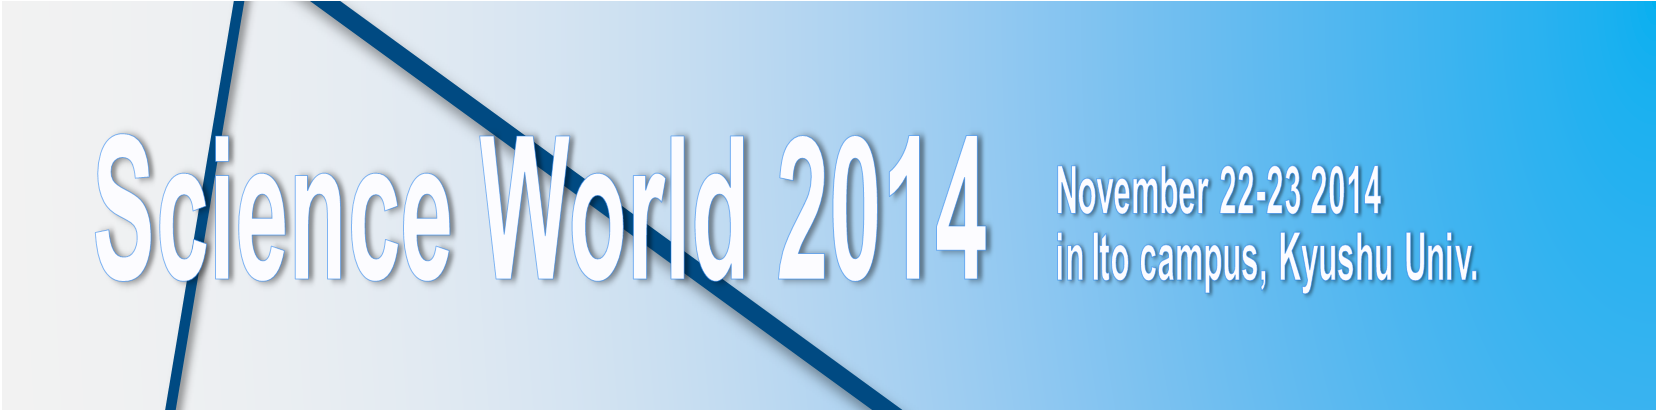 Sience world 2014